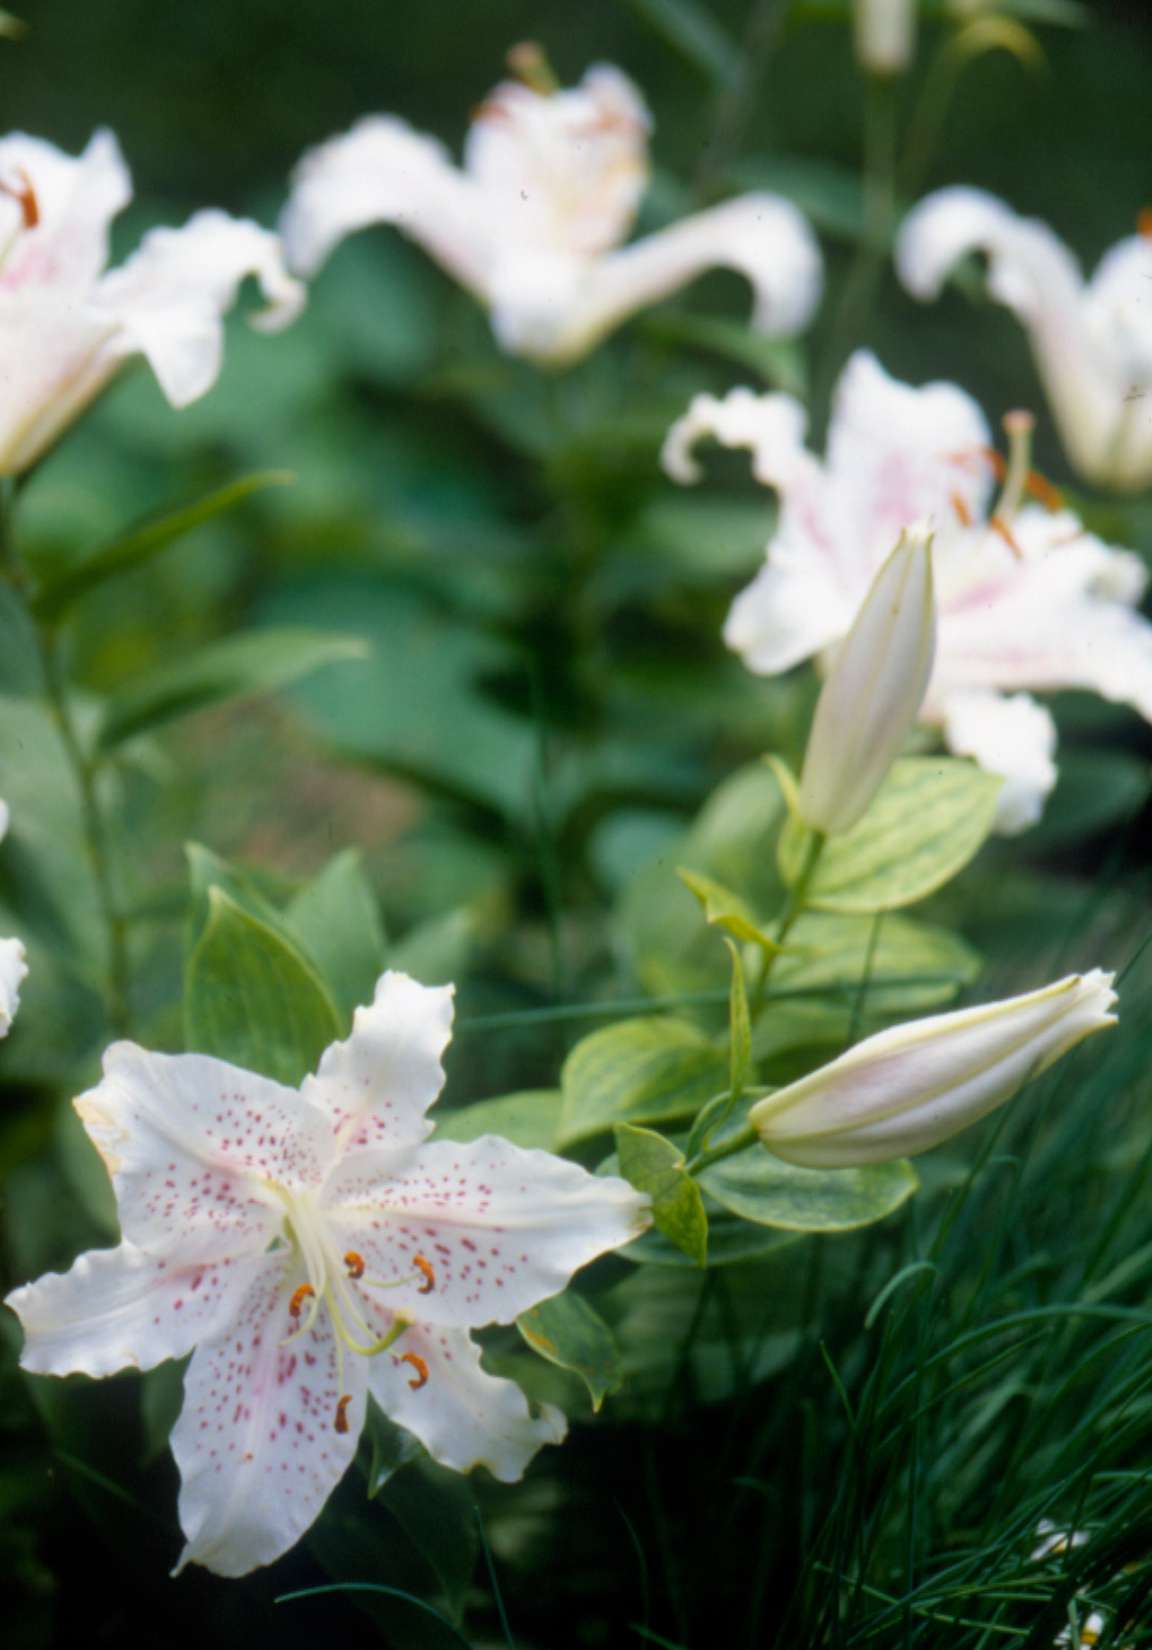 'Muscadet' Oriental lily